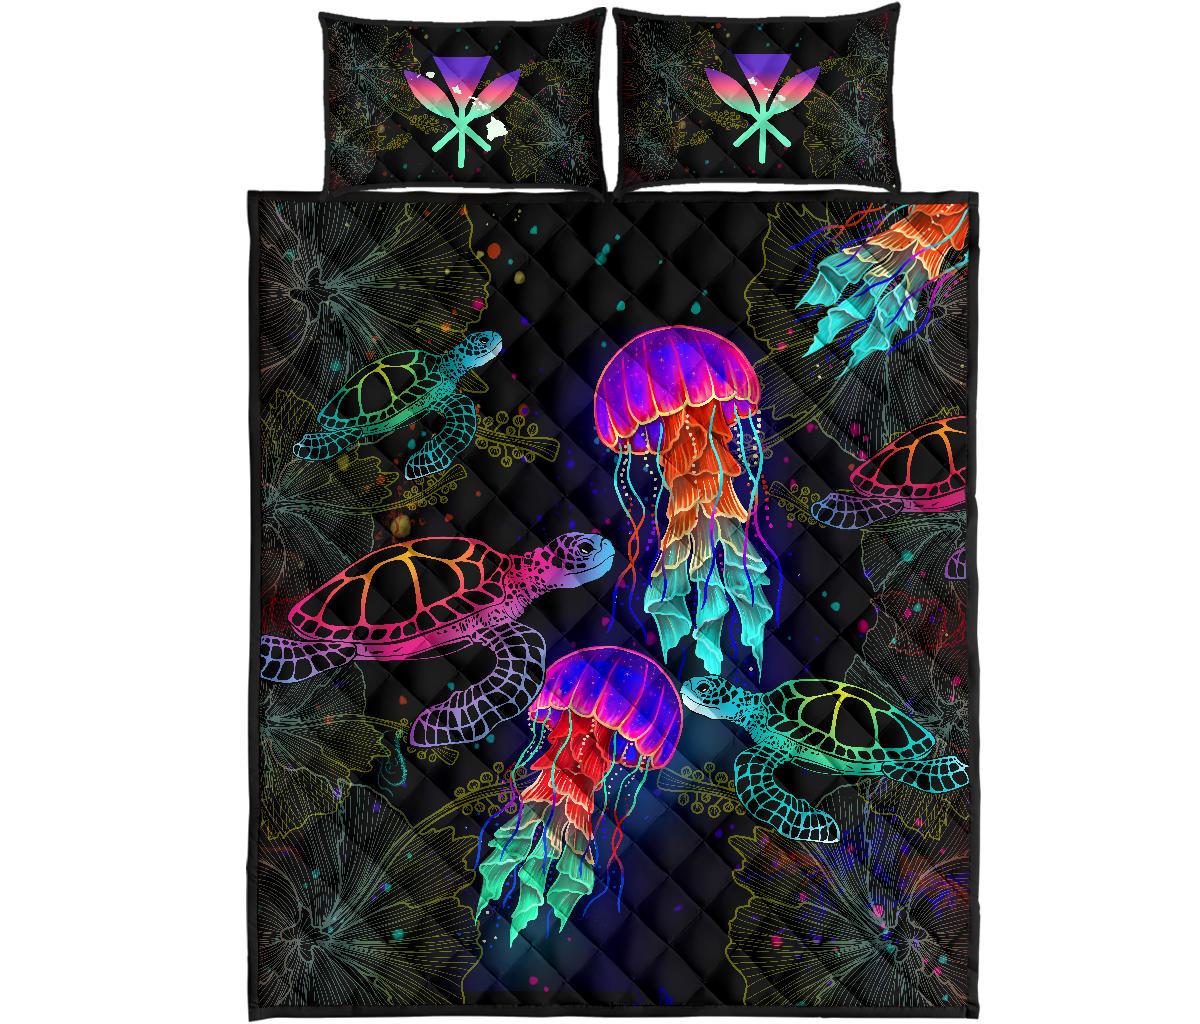 Kanaka Maoli (Hawaiian) Quilt Bed Set - Turtle And Jellyfish Colorful Coloful - Polynesian Pride